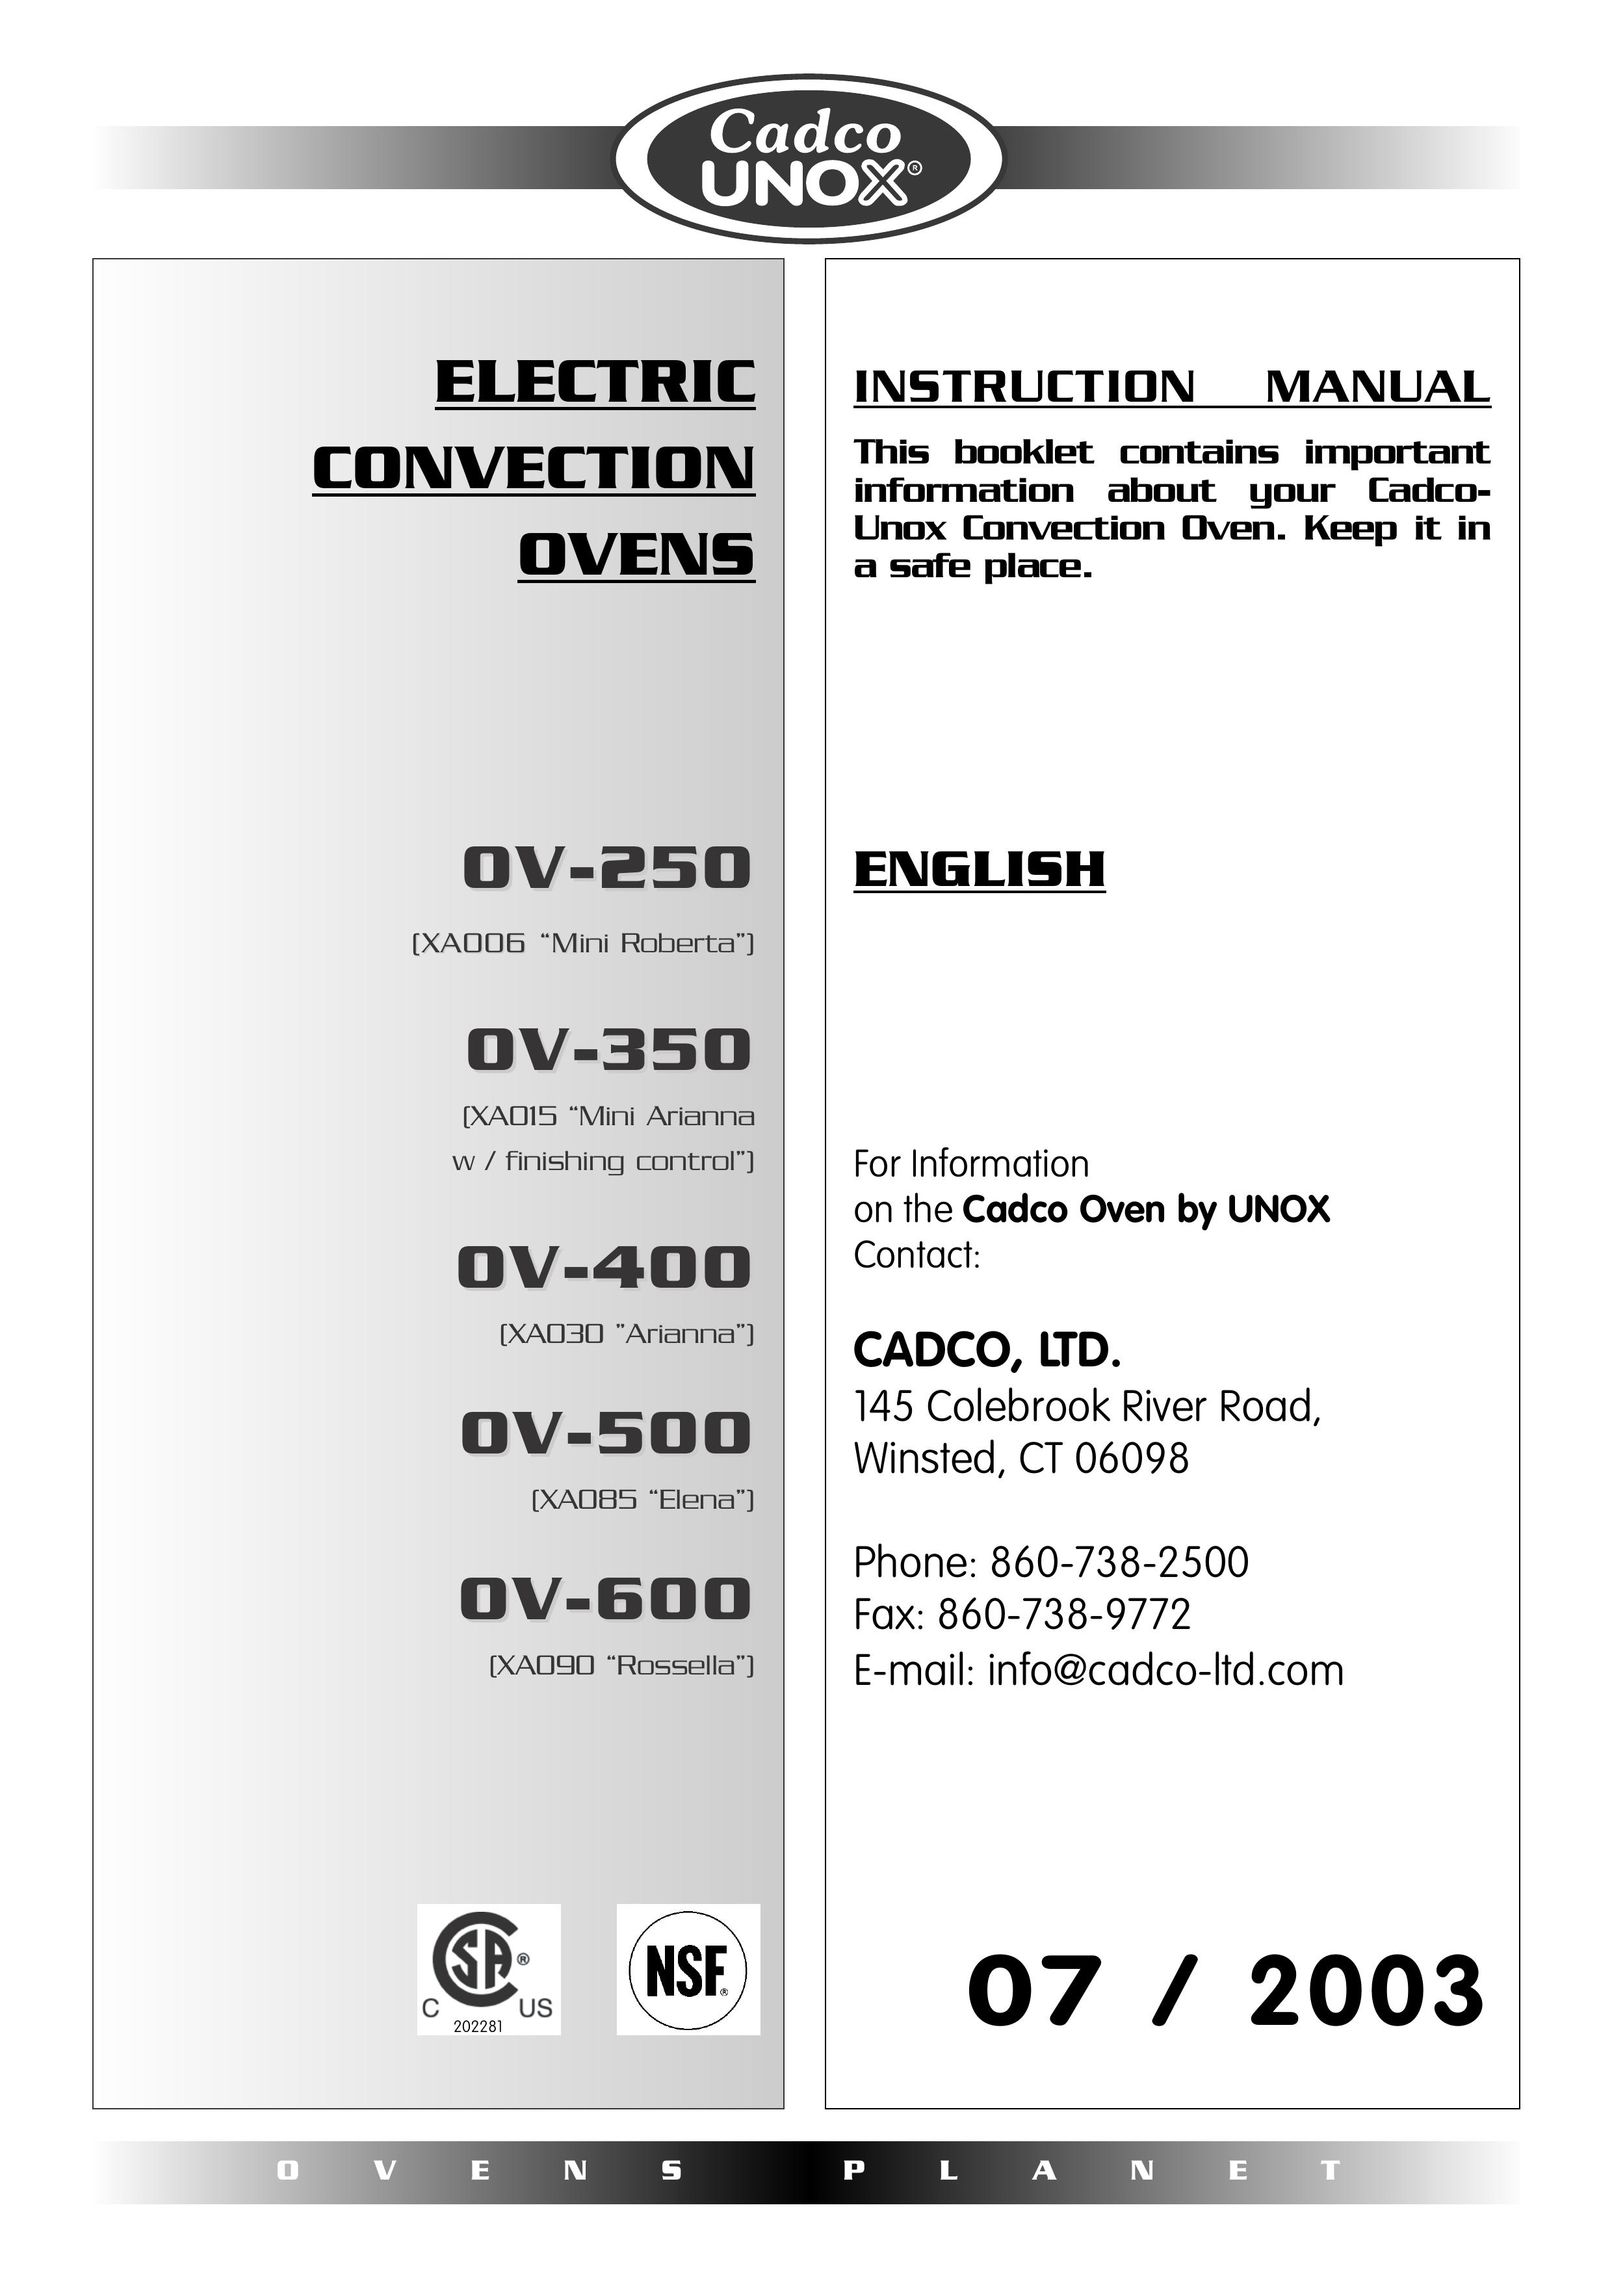 Cadco OV-600 Convection Oven User Manual